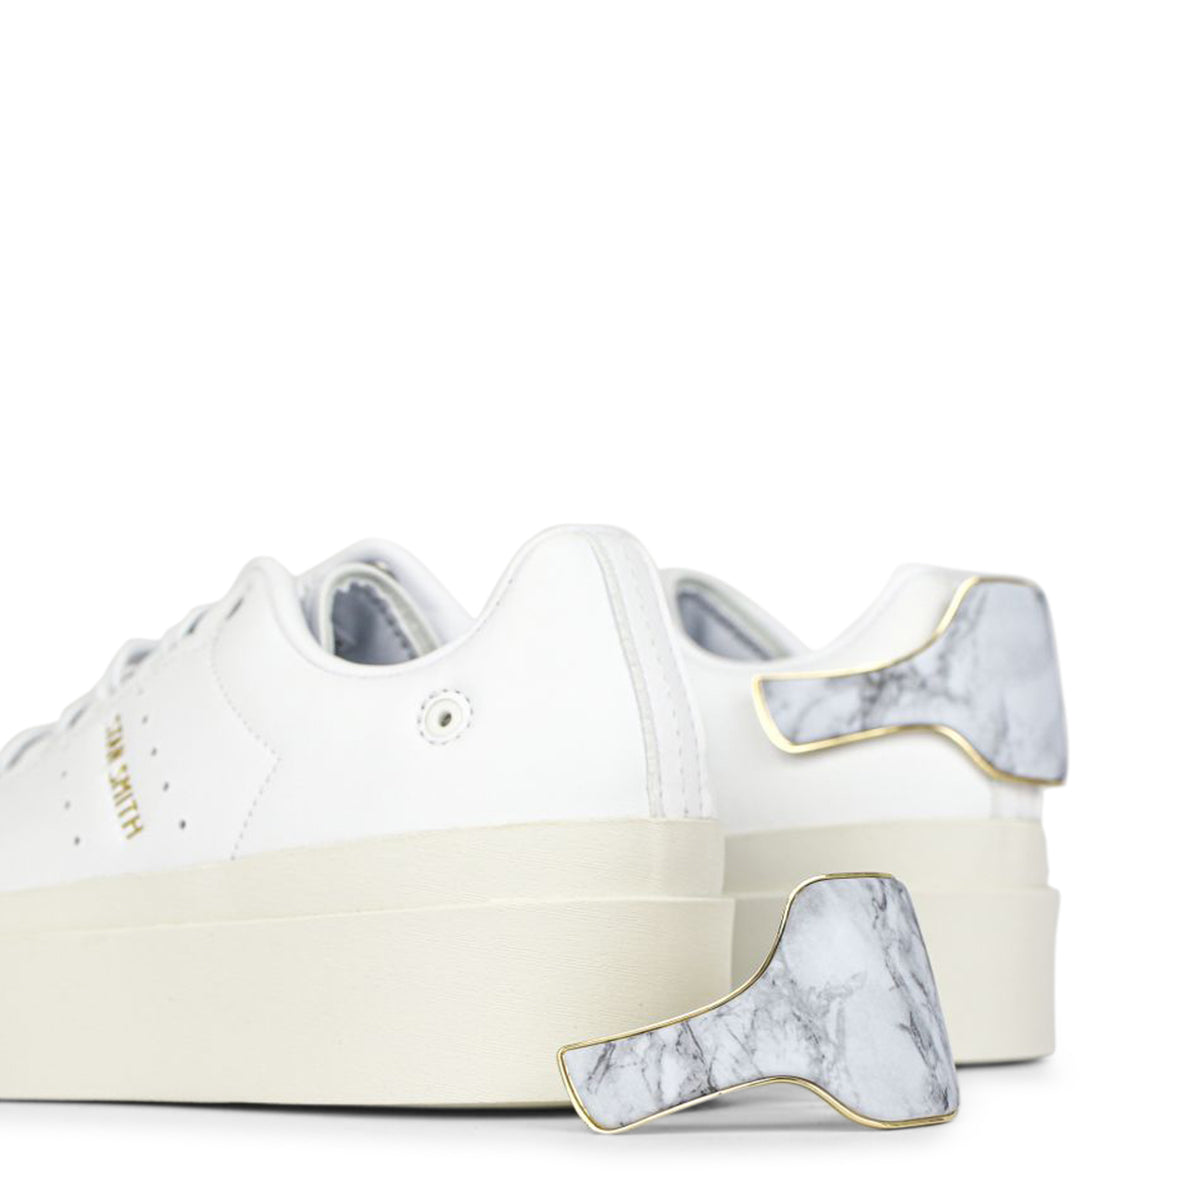 Adidas StanSmith Donna Bianco 130885. Colore: Bianco, Taglia: UK 7.5